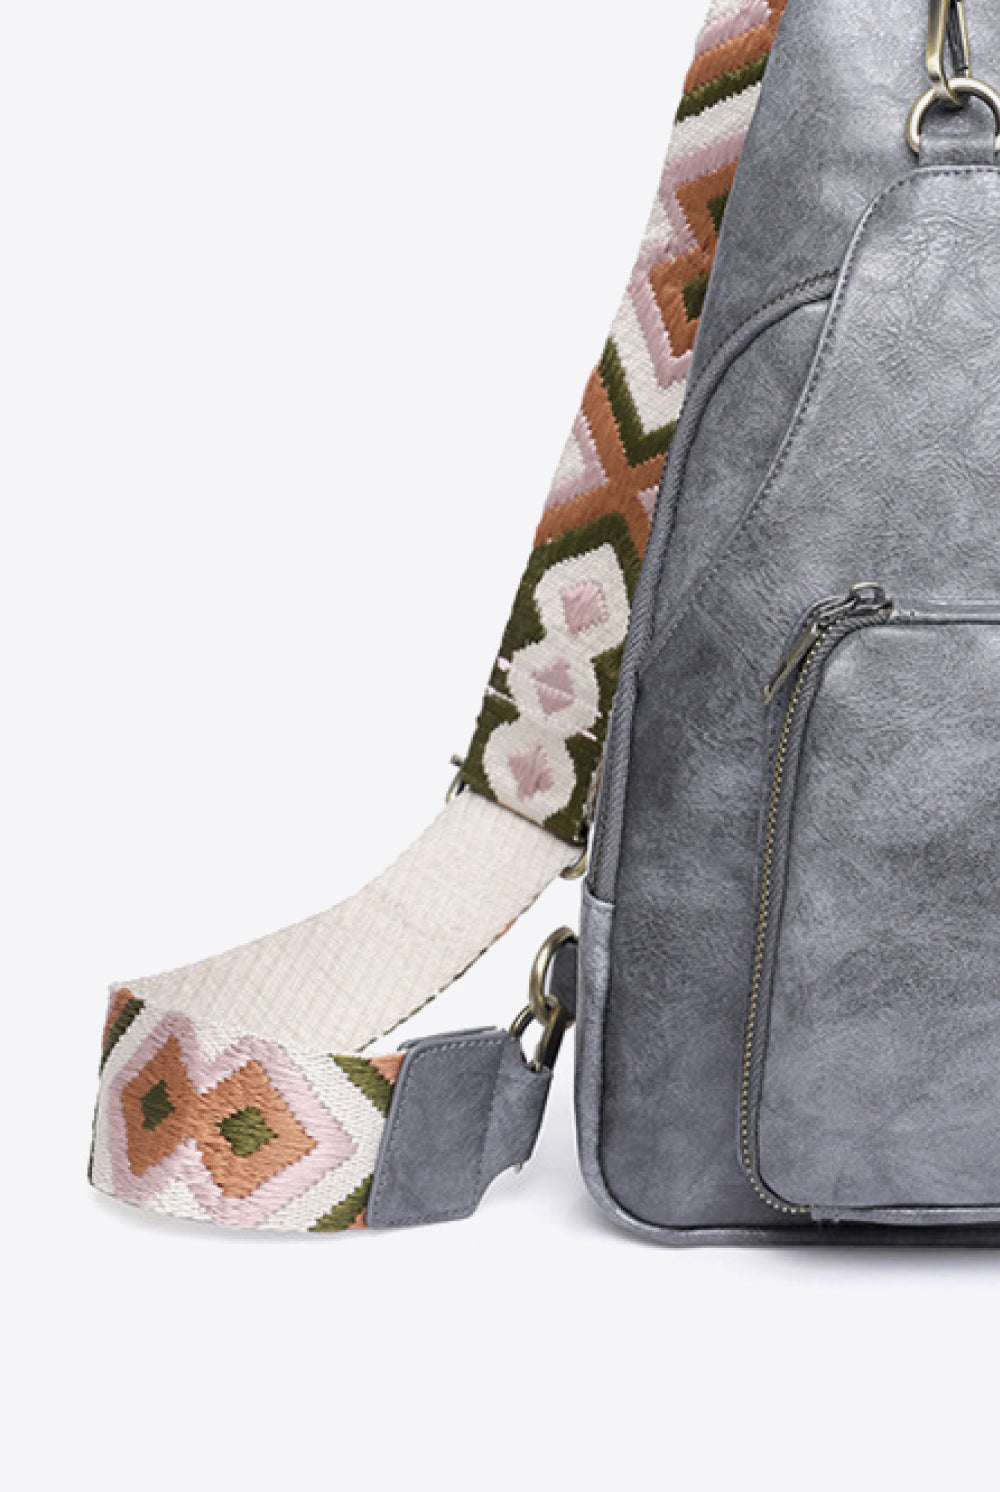 Dim Gray Adored Take A Trip PU Leather Sling Bag Handbags